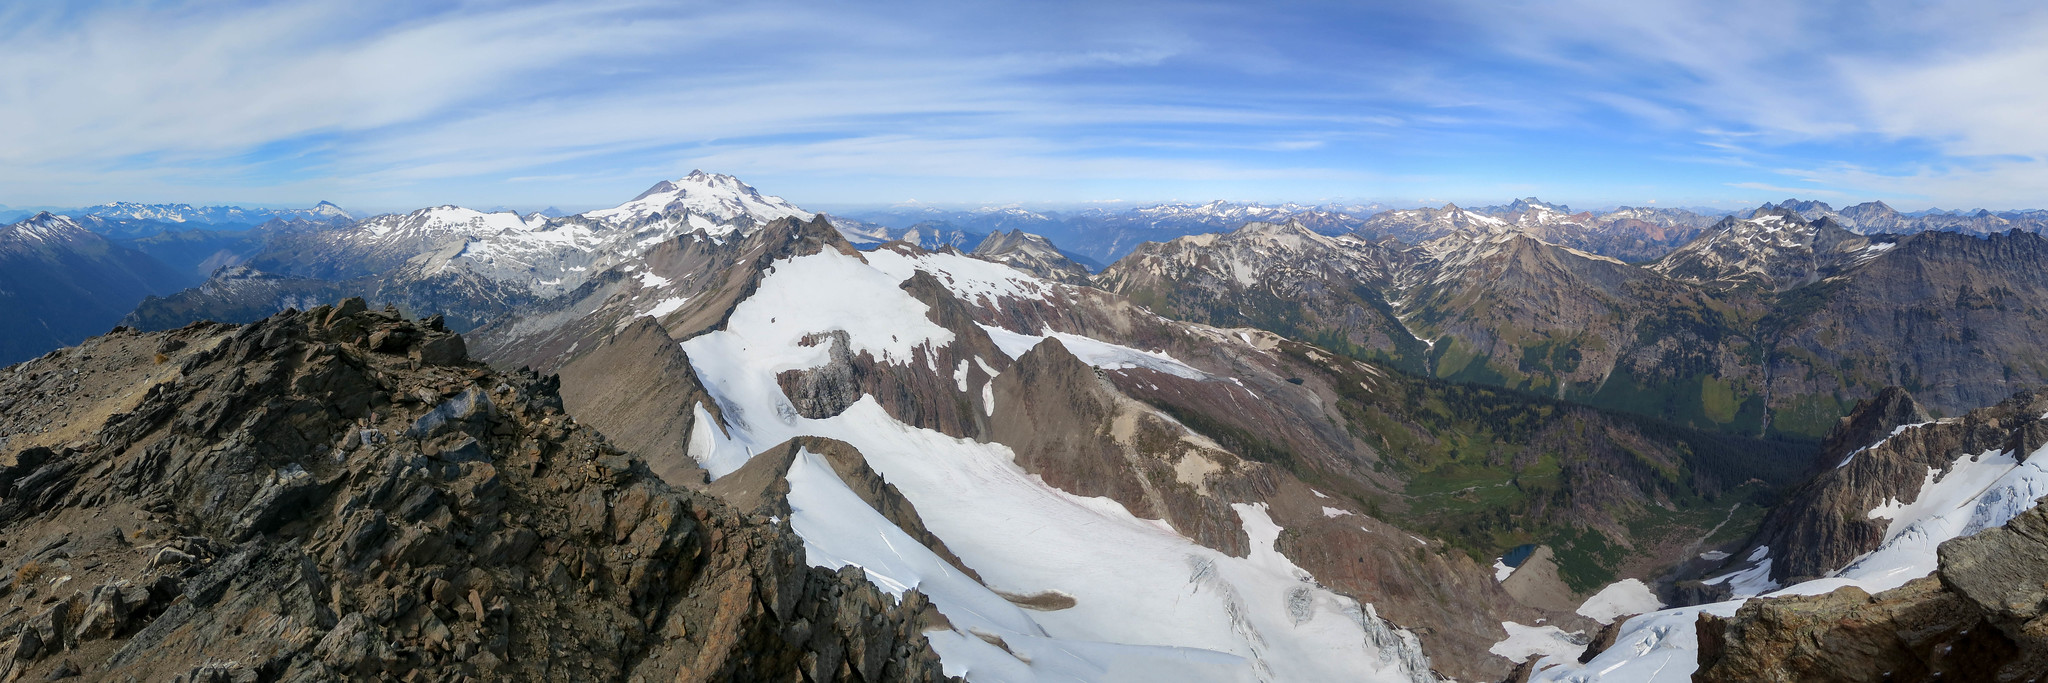 Northwest panoramic view on Clark Mountain